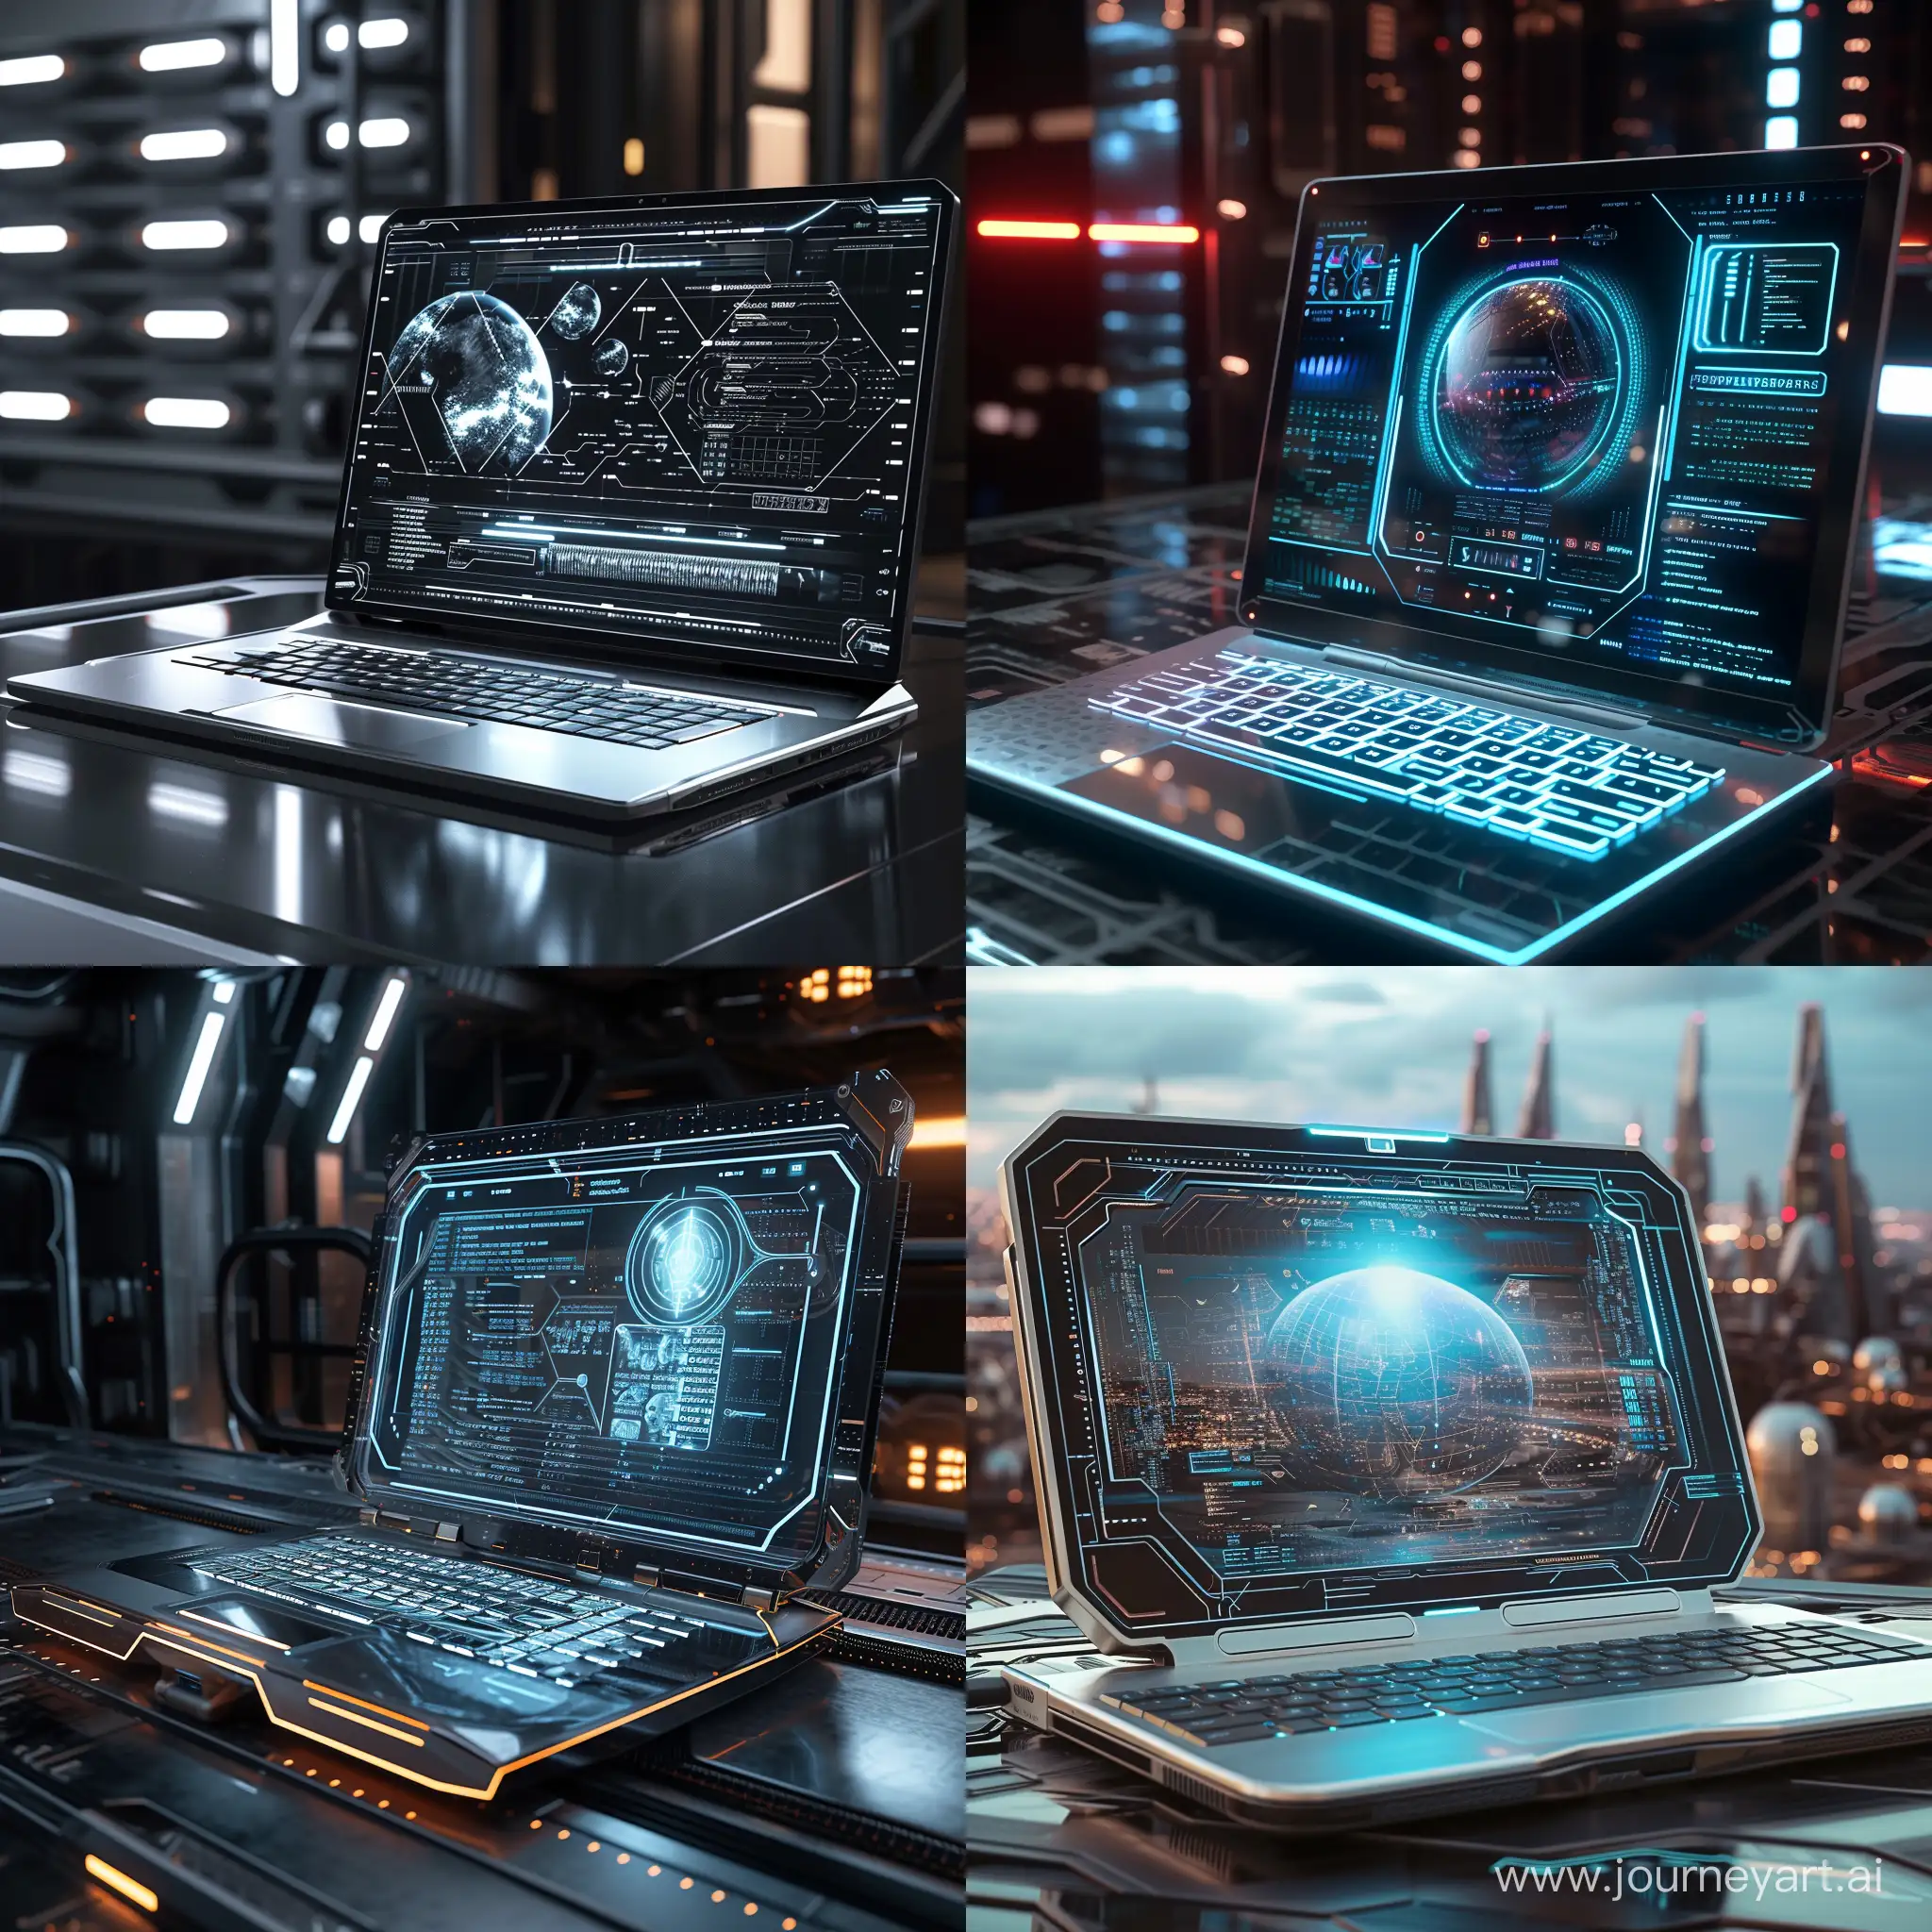 Futuristic-Laptop-Technology-in-Distant-Future-Scene